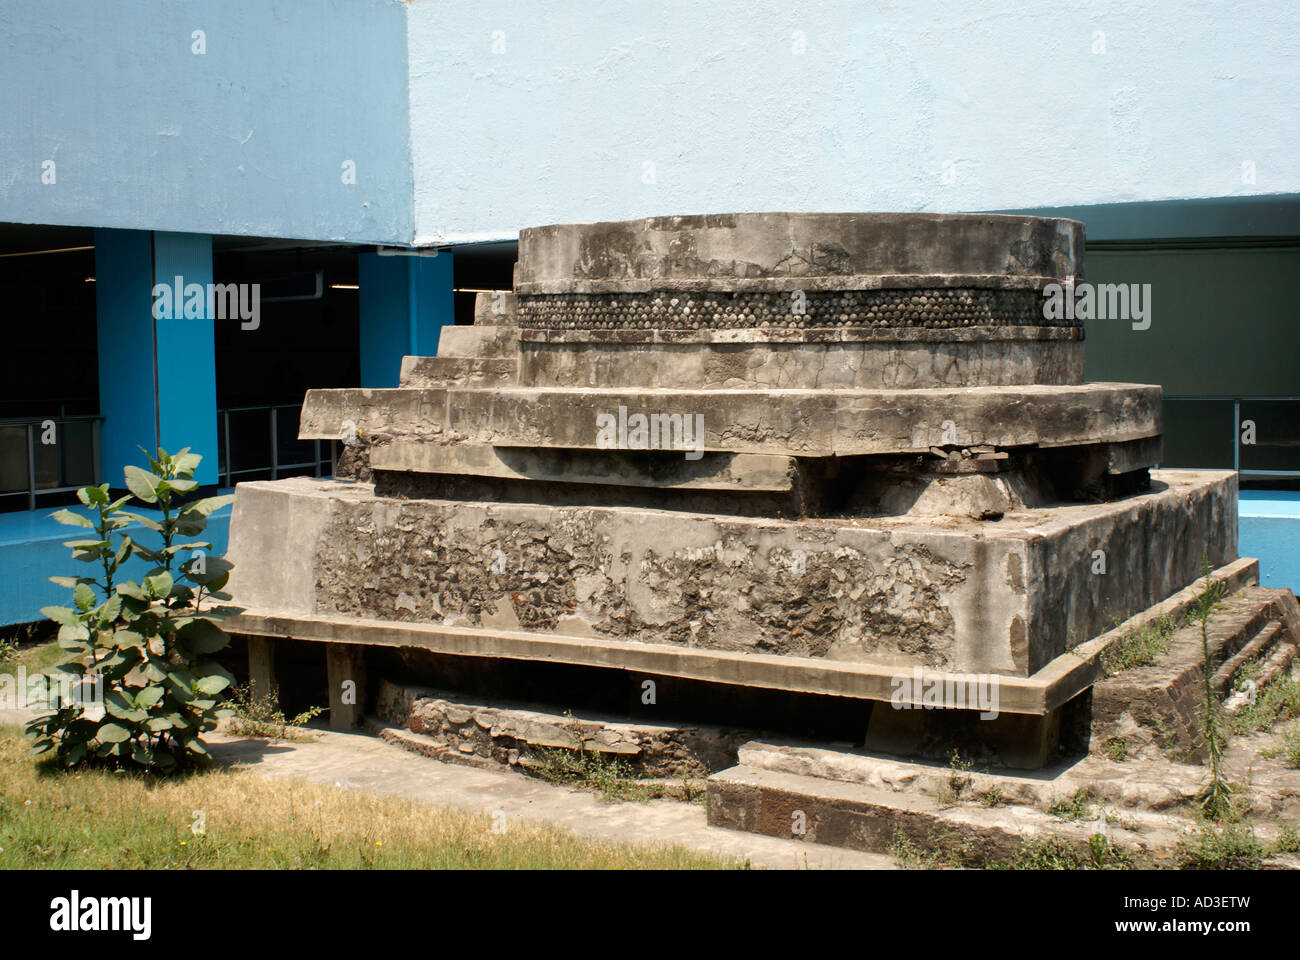 Aztec ruins, Pino Suarez metro station, Mexico City Stock Photo